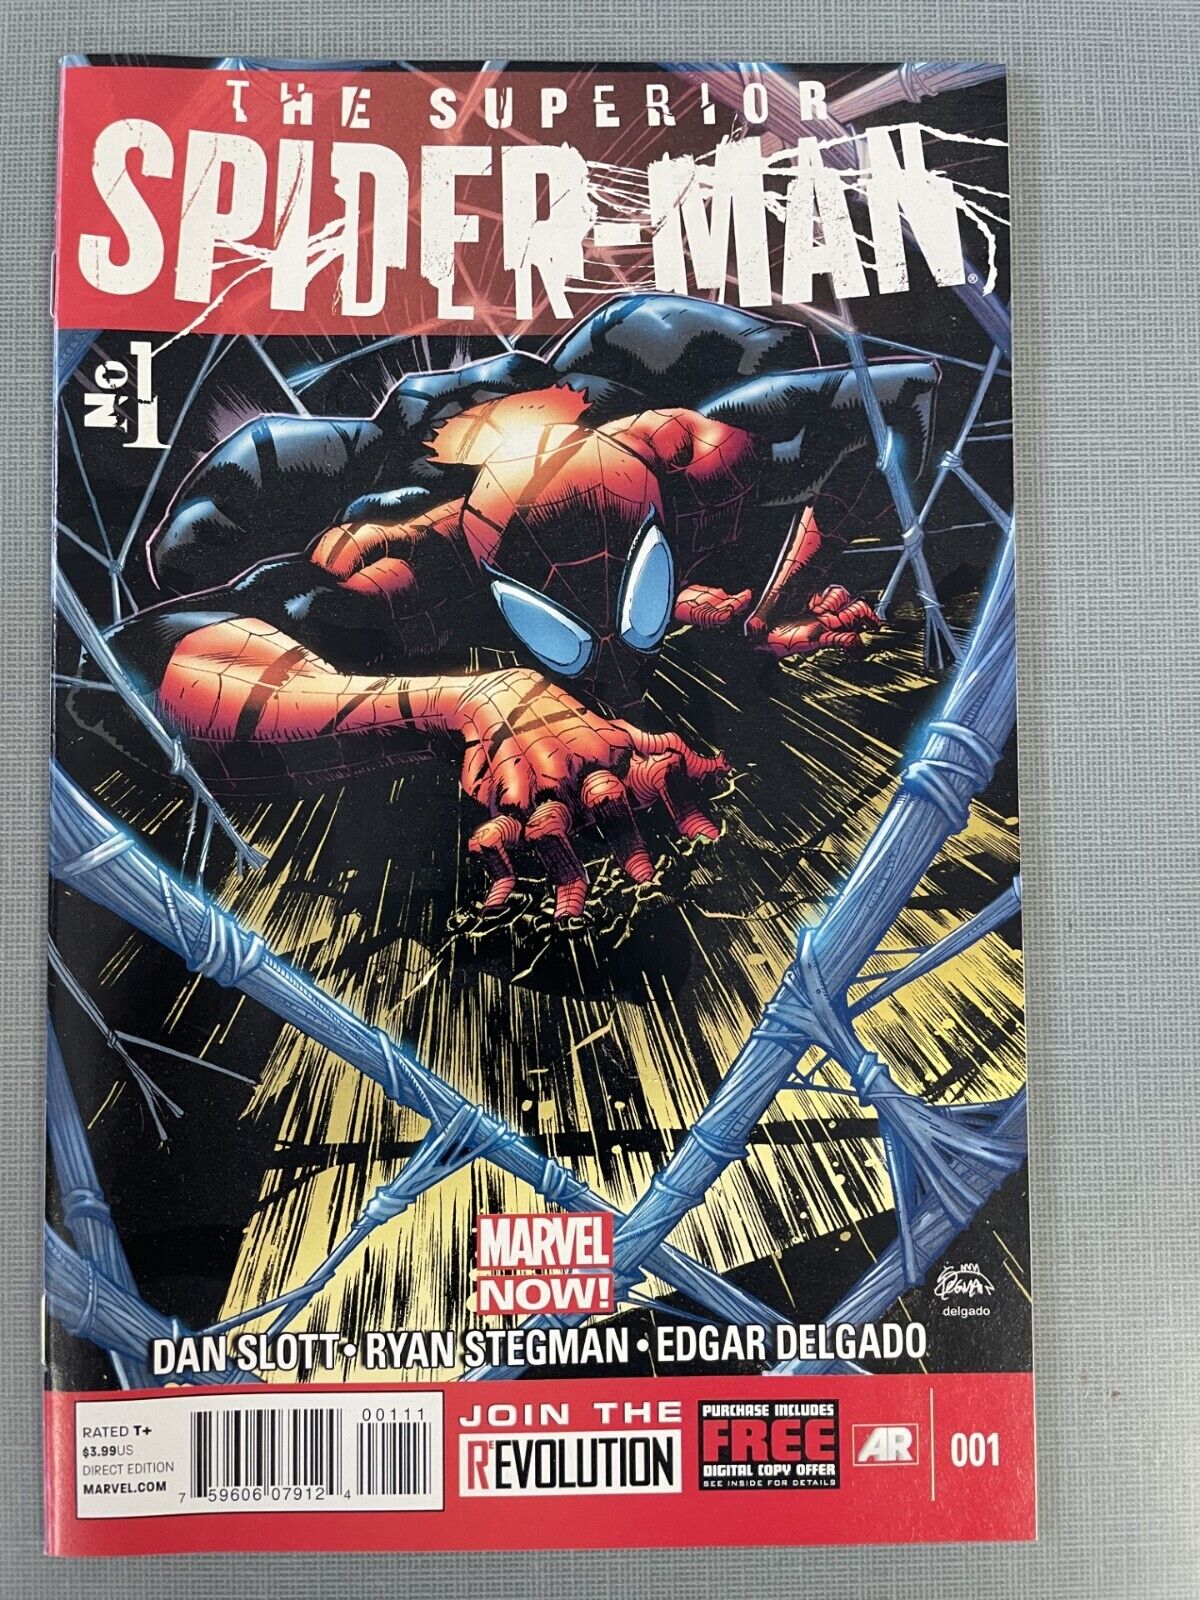 SUPERIOR SPIDER-MAN #1 2013 NEAR MINT UNREAD COPY RYAN STEGMAN ART